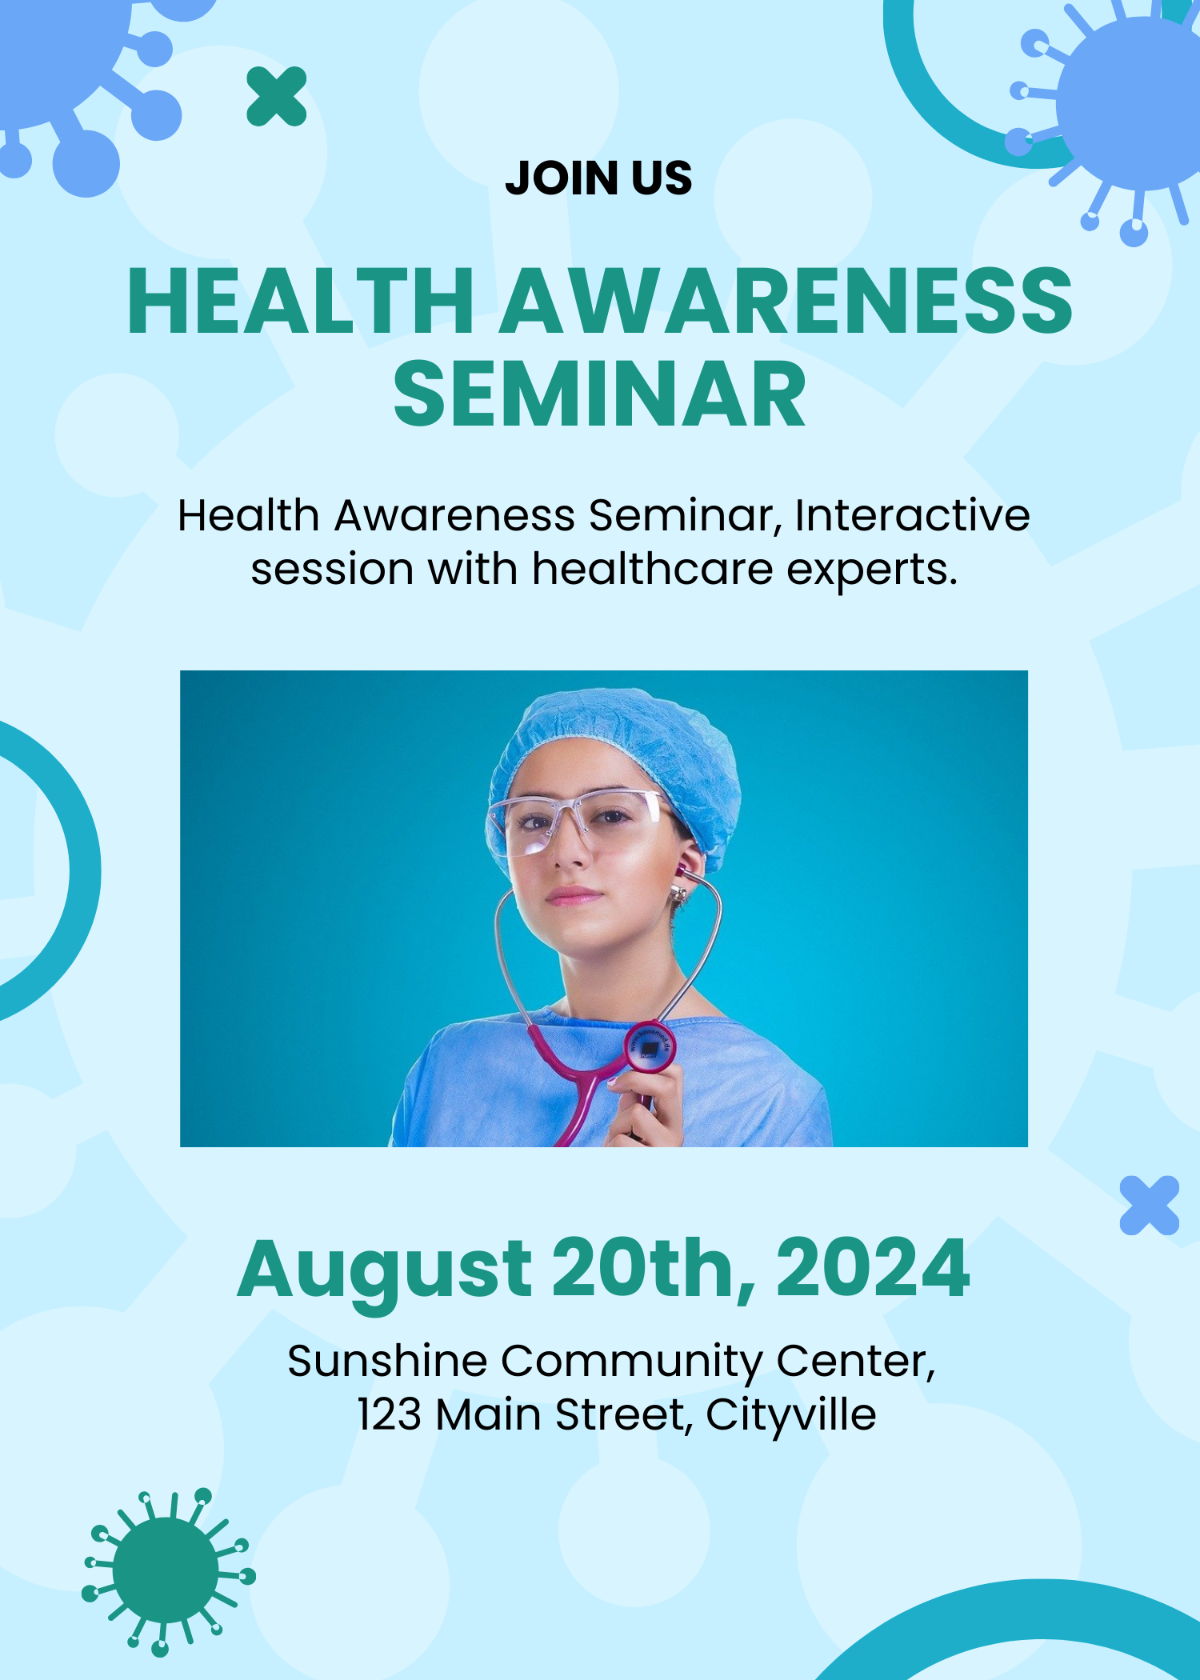 Health Awareness Seminar Invitation